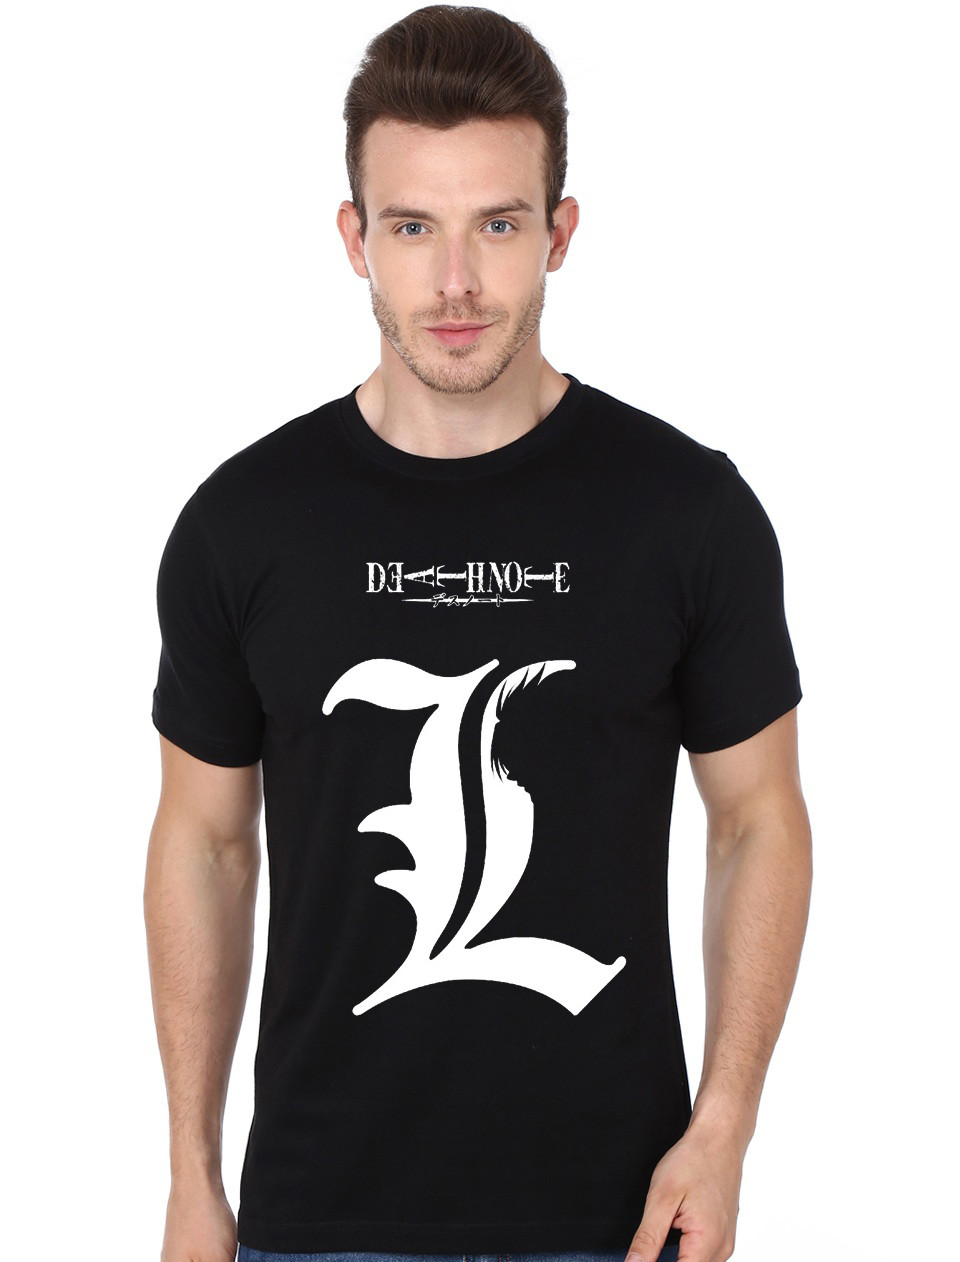 L Deathnote Black T-Shirt | Swag Shirts